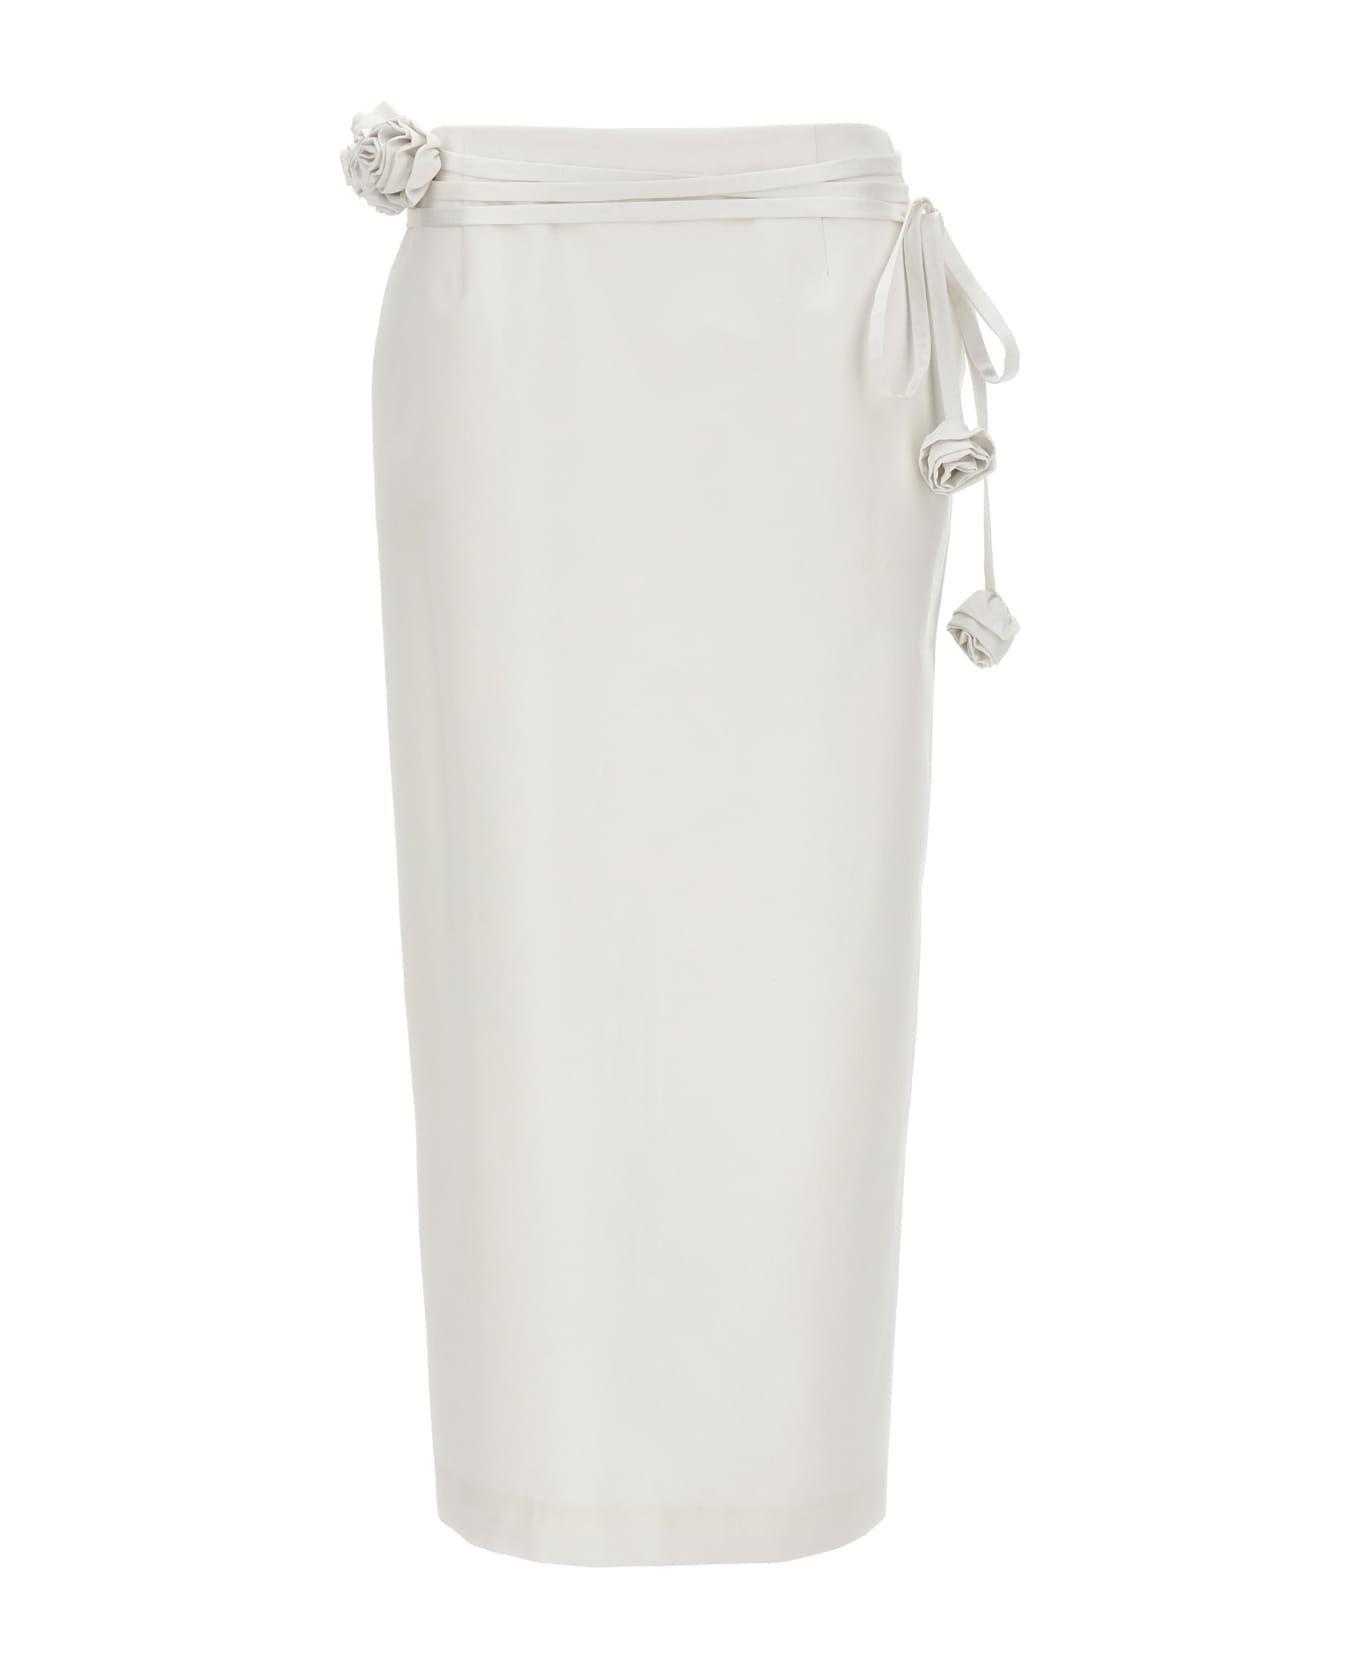 Magda Butrym Floral Detail Midi Skirt - White